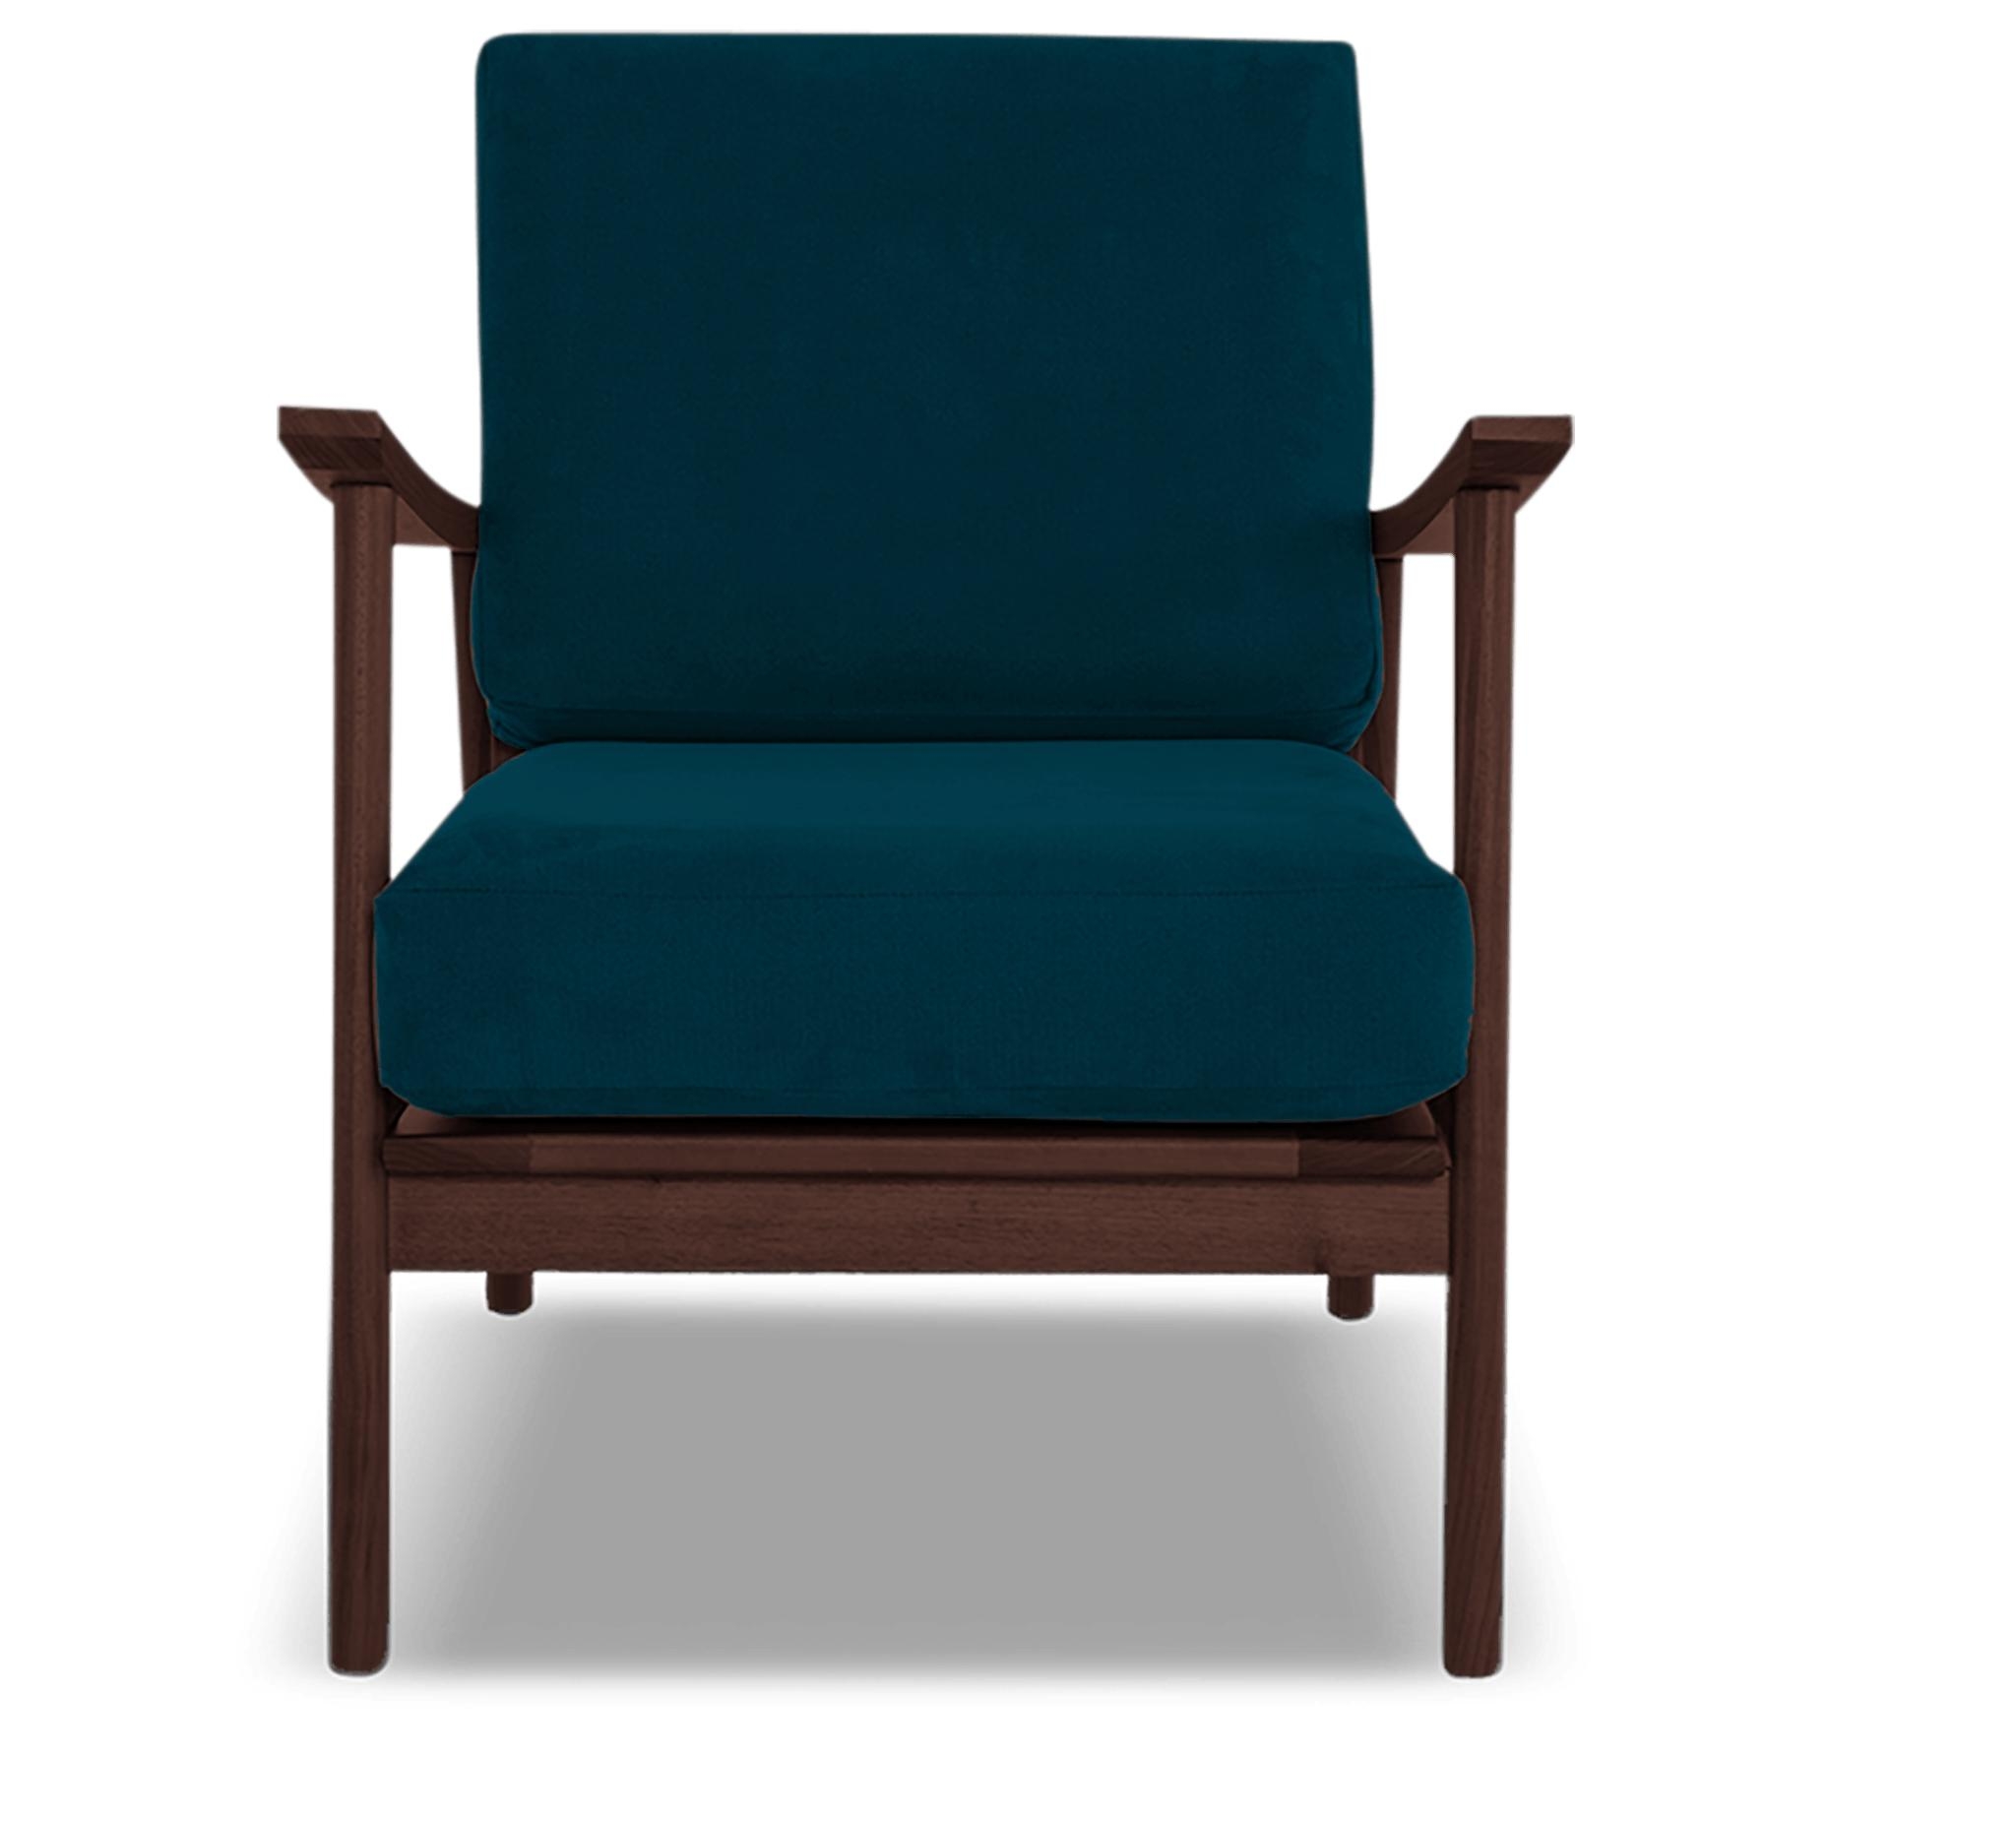 Blue Paley Mid Century Modern Chair - Key Largo Zenith Teal - Walnut - Image 0